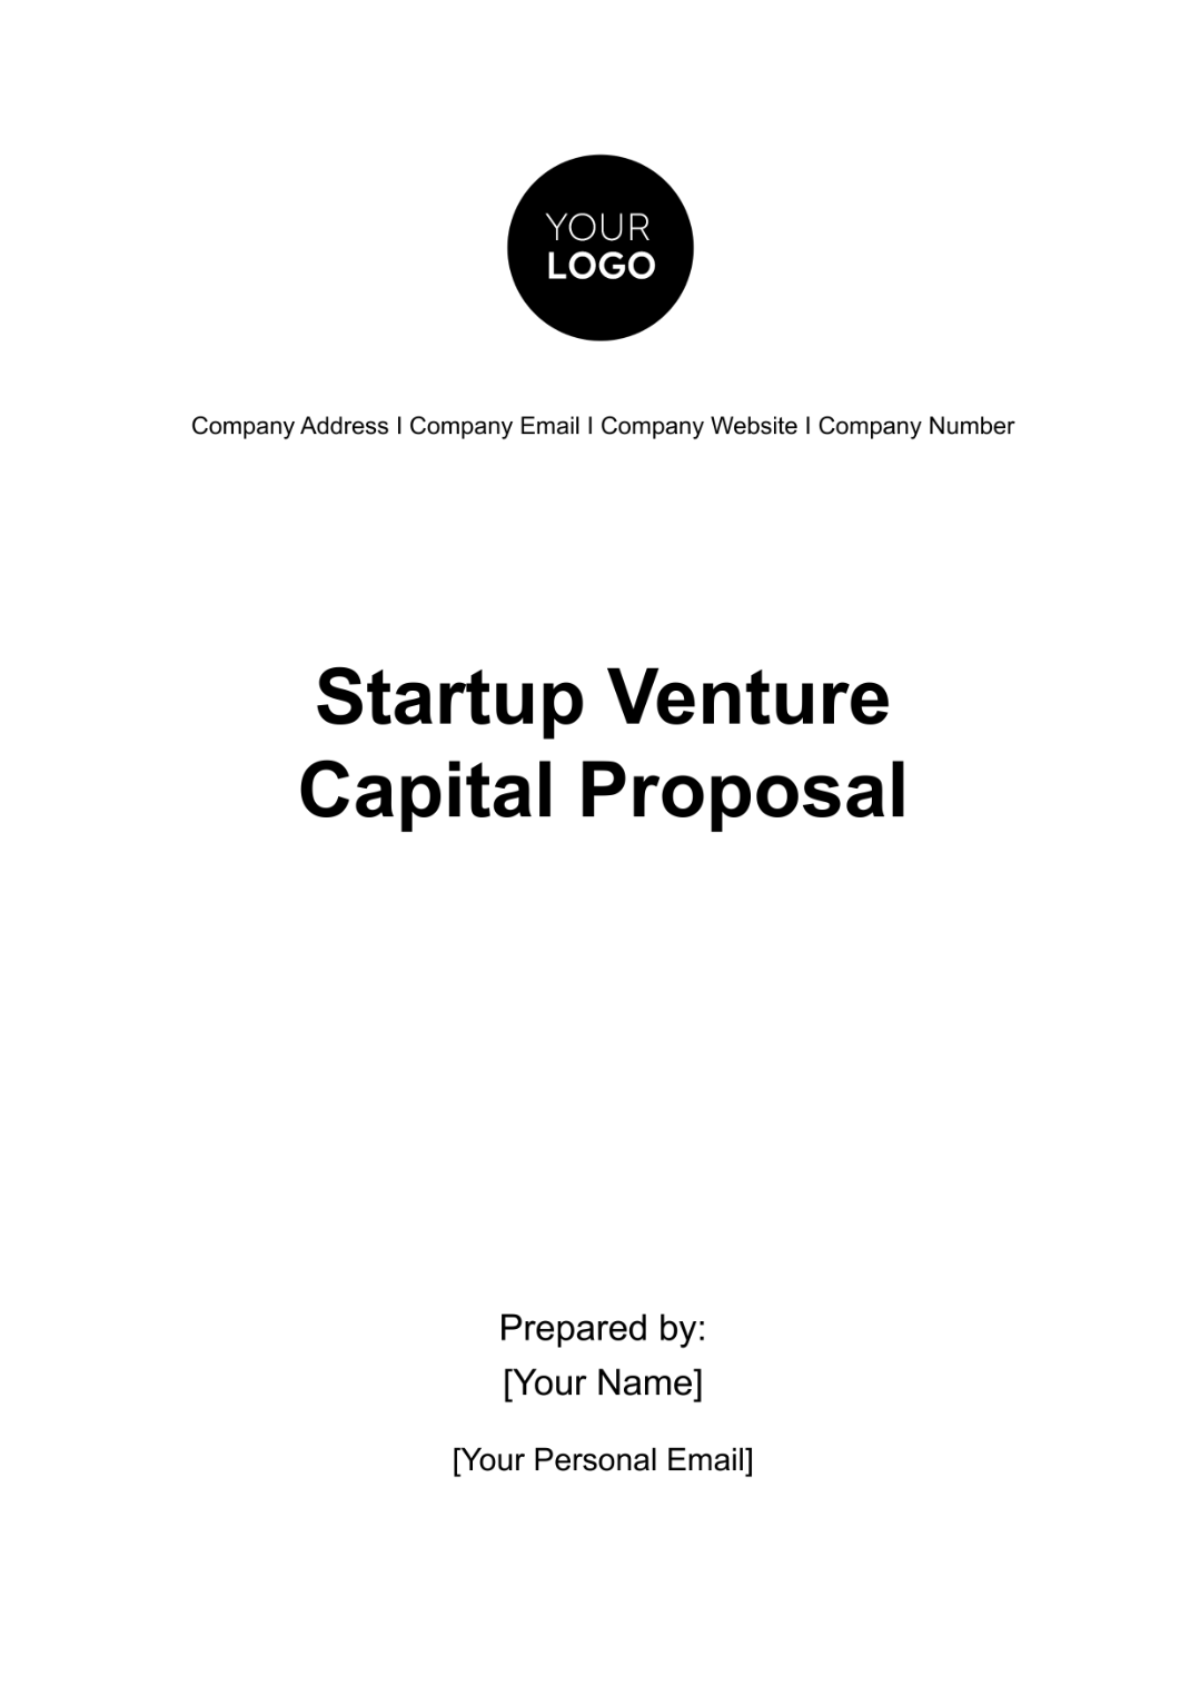 Startup Venture Capital Proposal Template